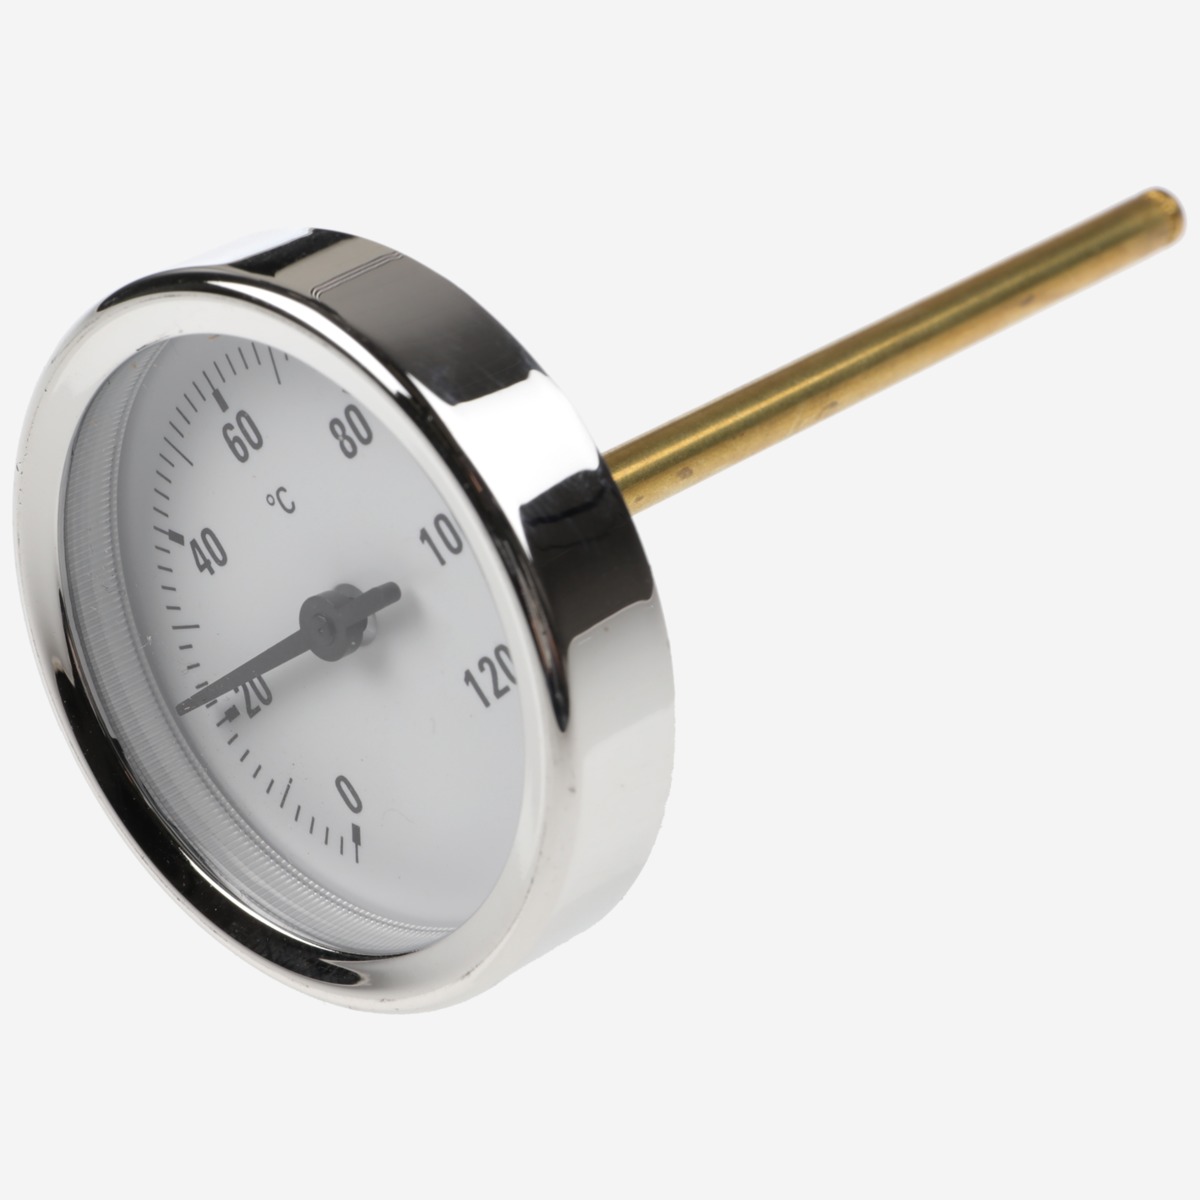 Weishaupt Thermometer 0-120Cel. Dm.51mm Fühler Dm.5 x 83mm